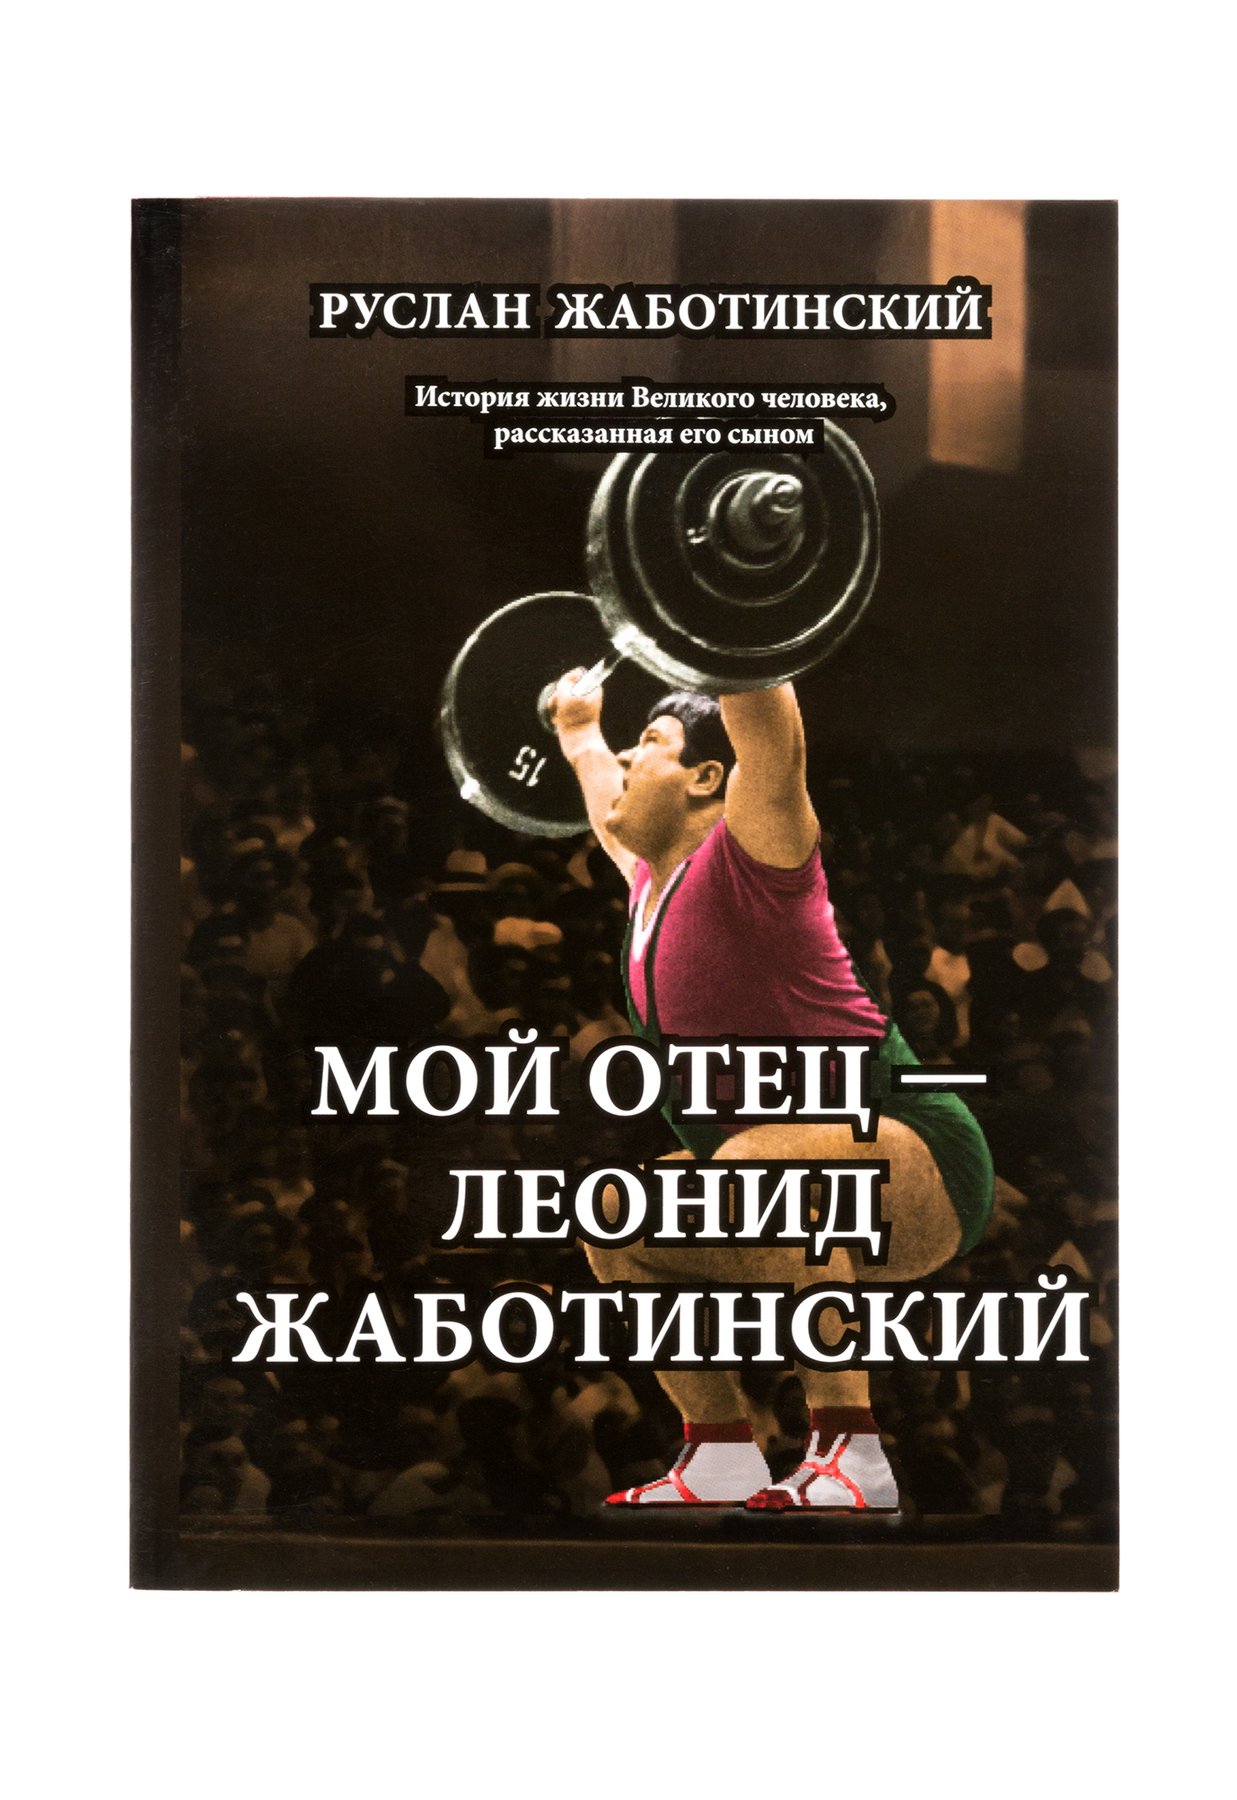 Book My father Leonid Zhabotinsky